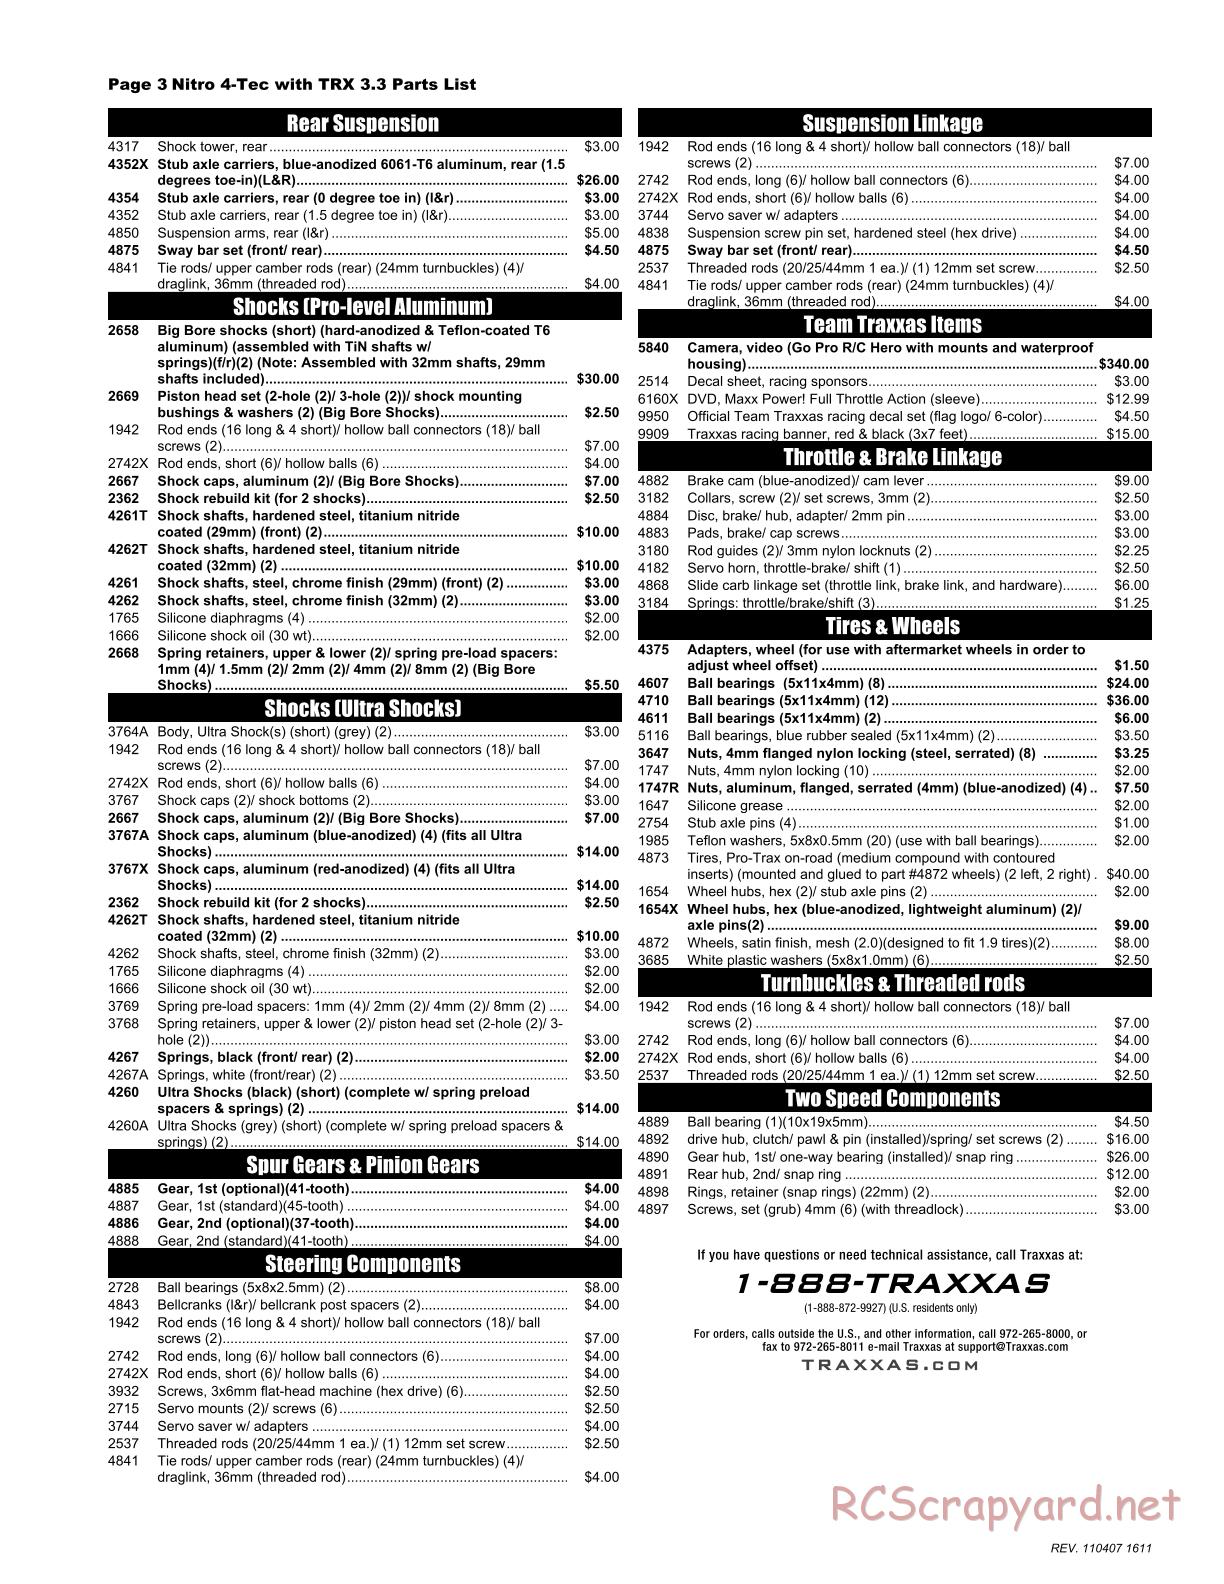 Traxxas - Nitro 4-Tec 3.3 (2006) - Parts List - Page 3